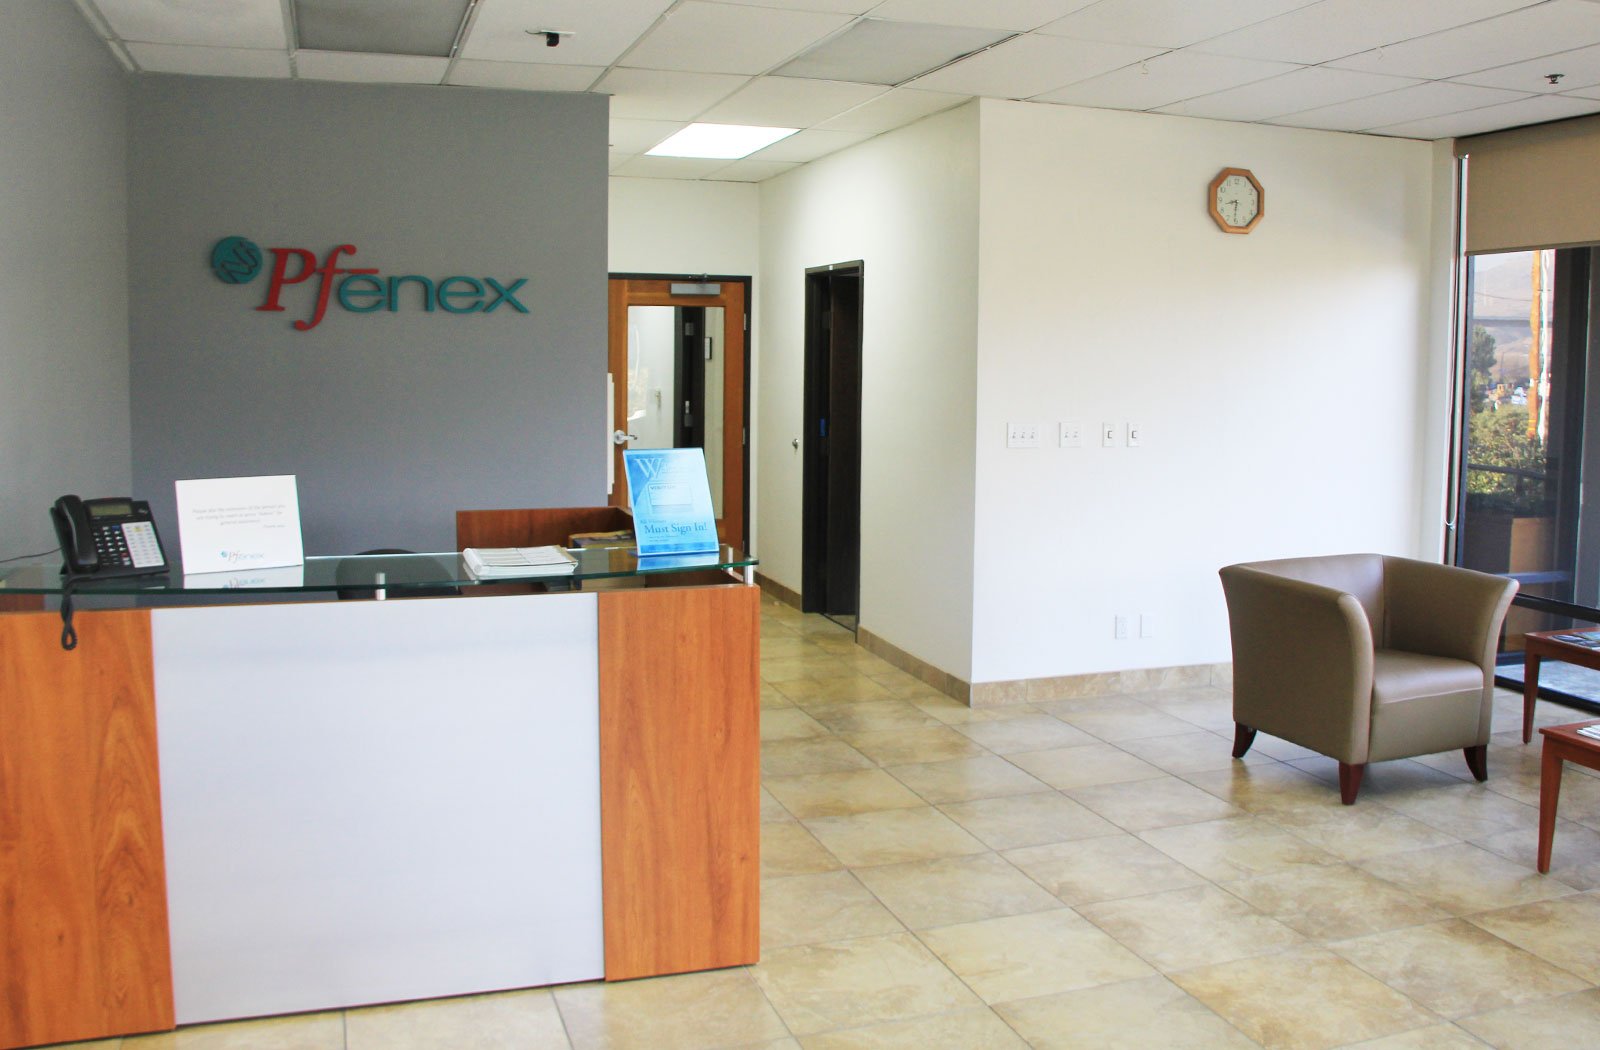 Pfenex reception area